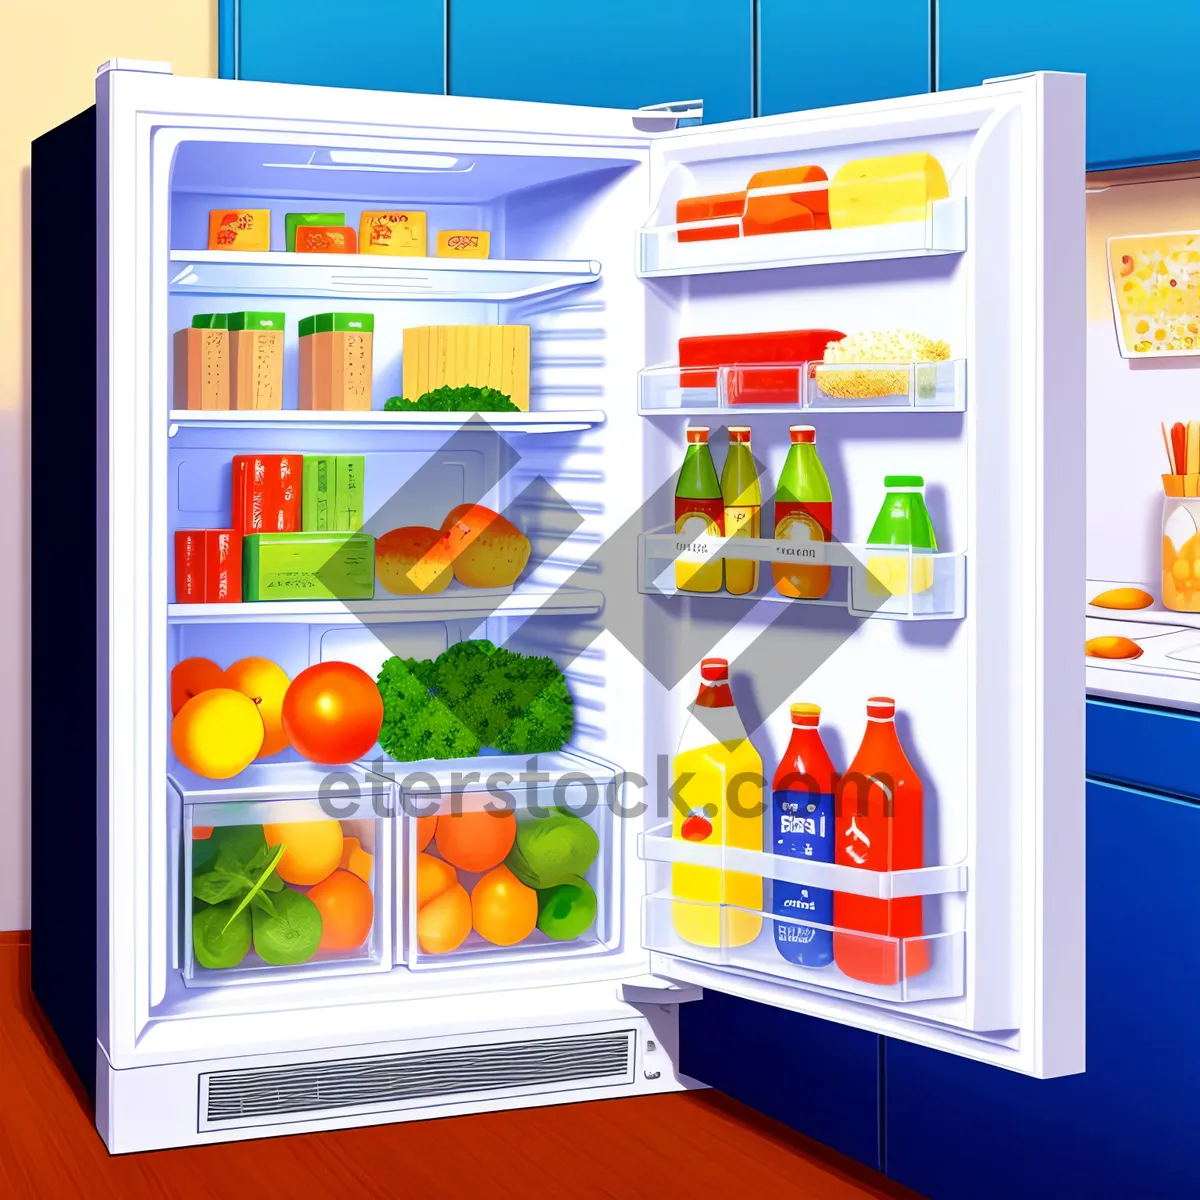 Picture of Versatile Home Appliance - Vending, Slot & Refrigeration